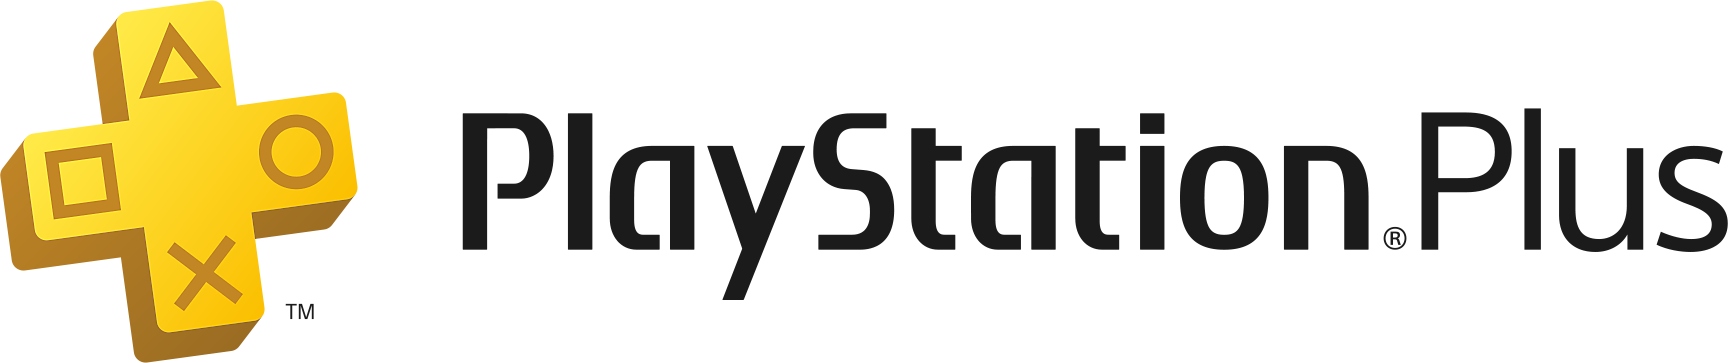 PlayStation Plus – sort logo